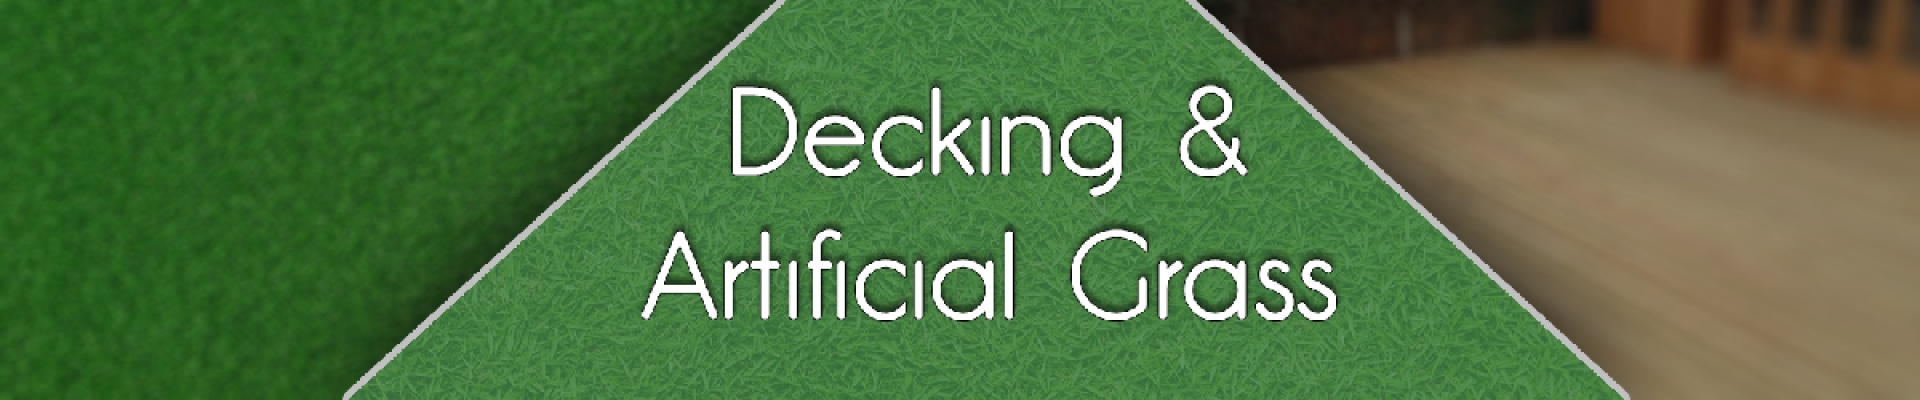 Decking and Artificial Grass Banner